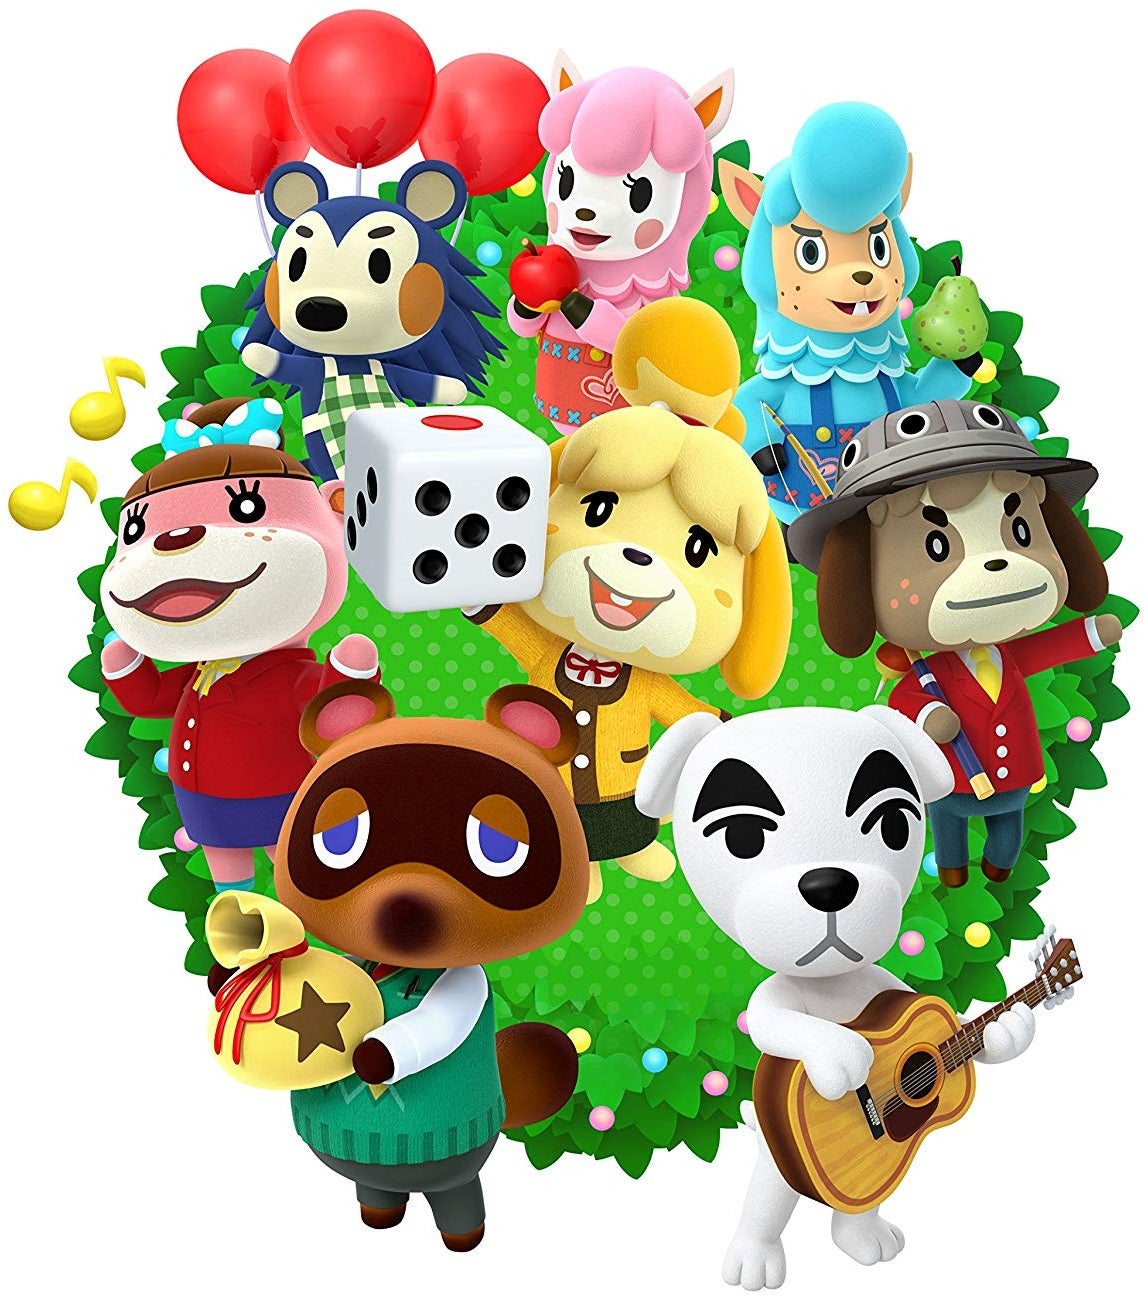 Nintendo Animal Crossing Amiibo Cards - Series 4 - 3 Card Pack